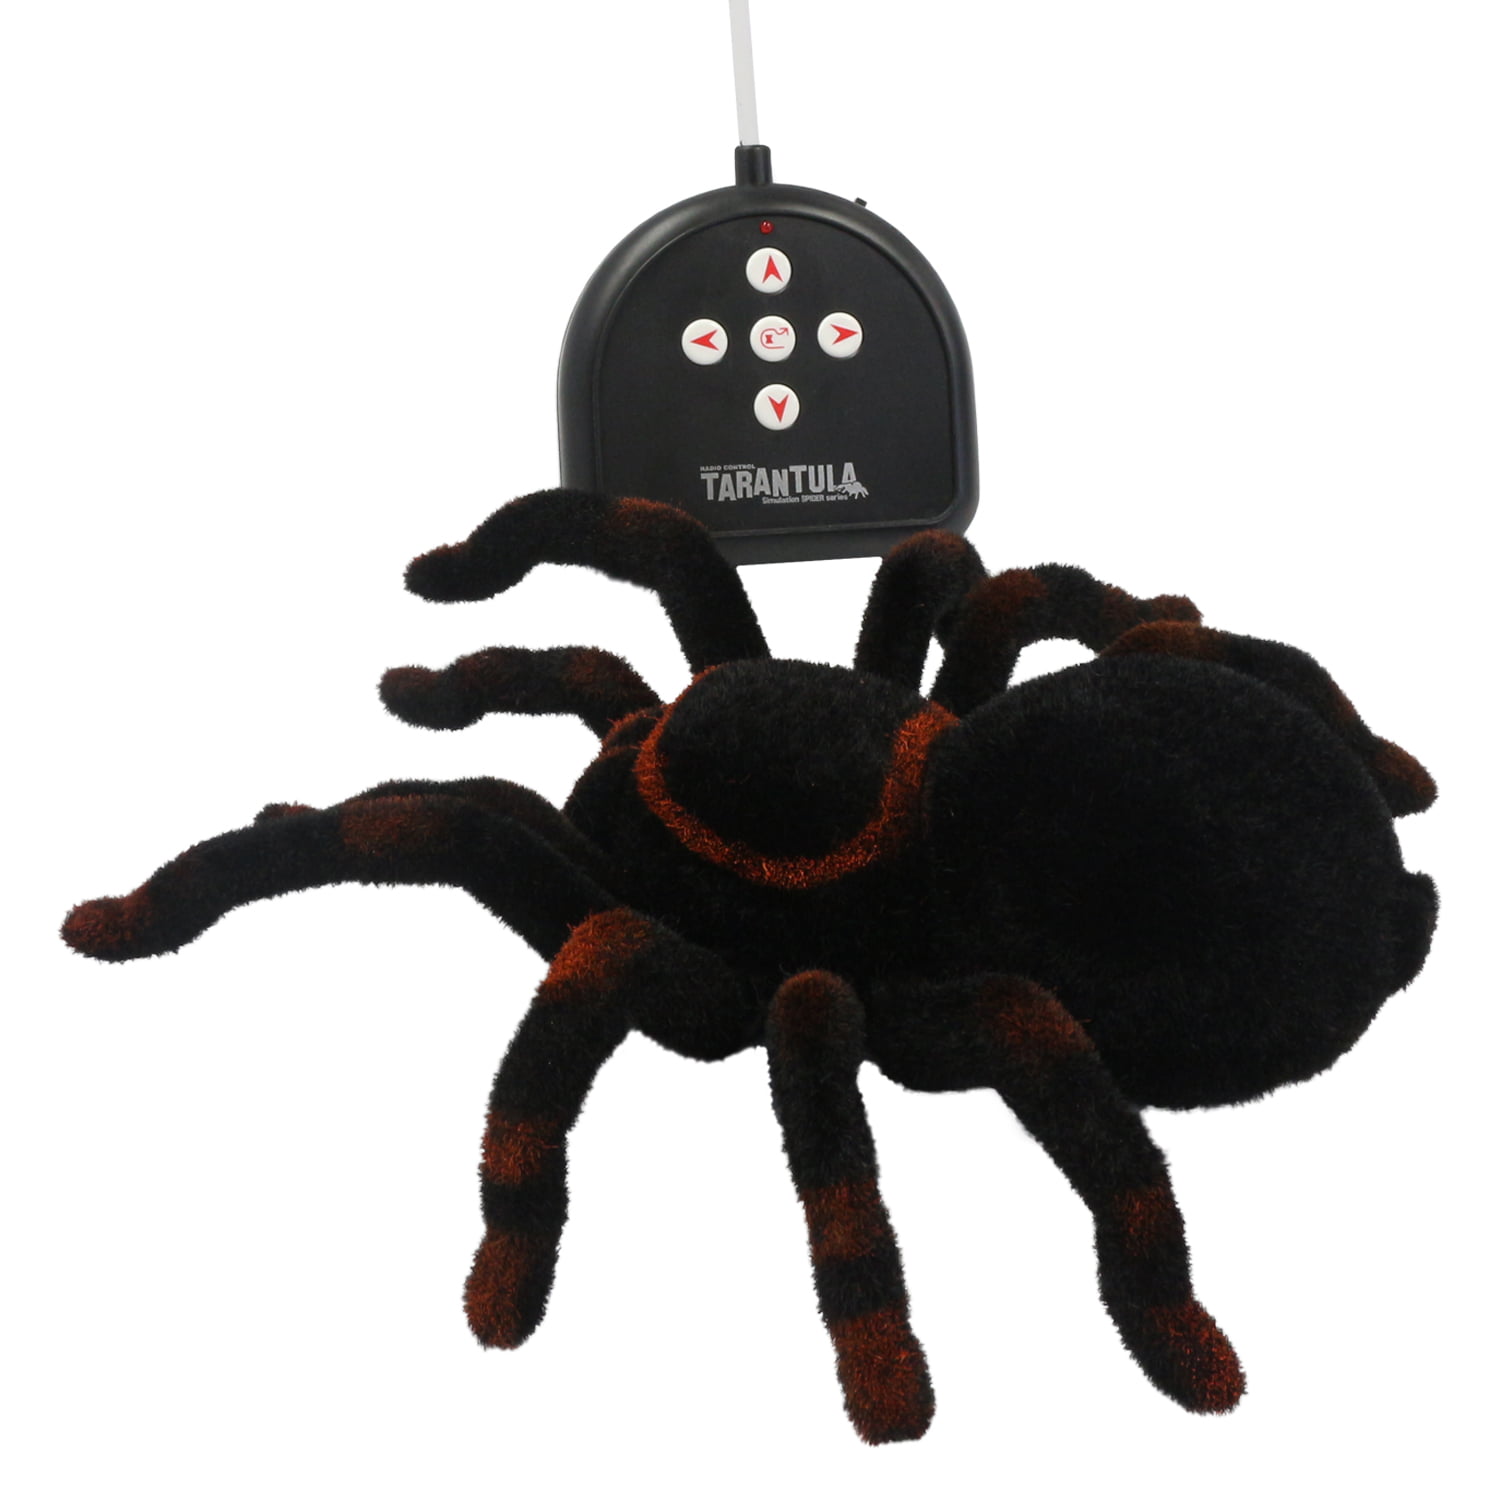 Realistic Giant 8" RC Tarantula Animal Figures 4-Way Spider Remote Control Toys 